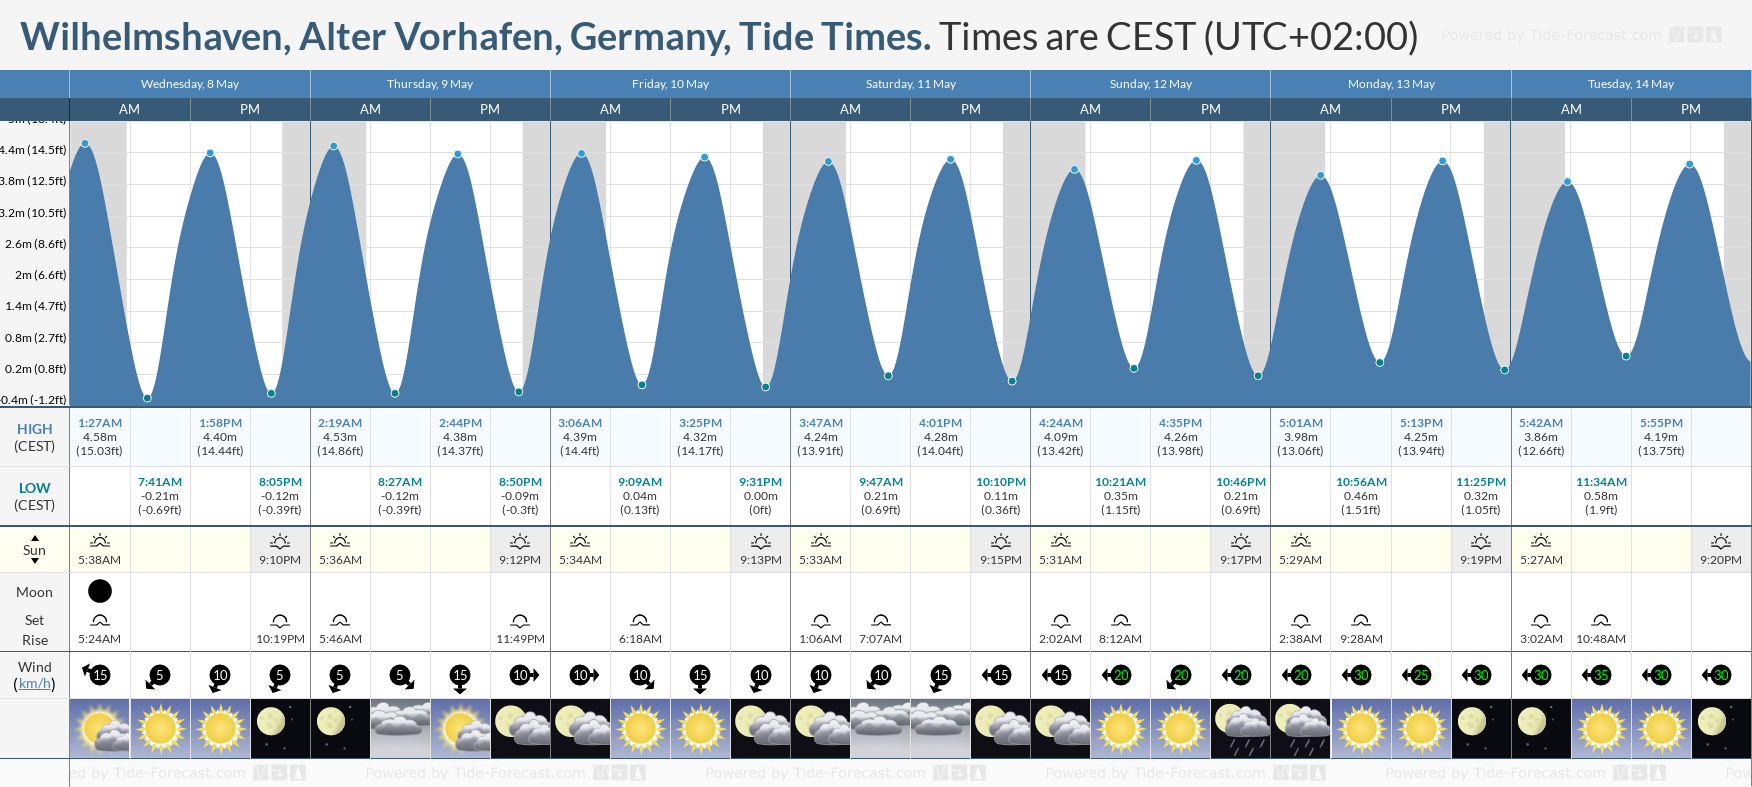 Wilhelmshaven, Alter Vorhafen, Germany Tide Chart including high and low tide tide times for the next 7 days